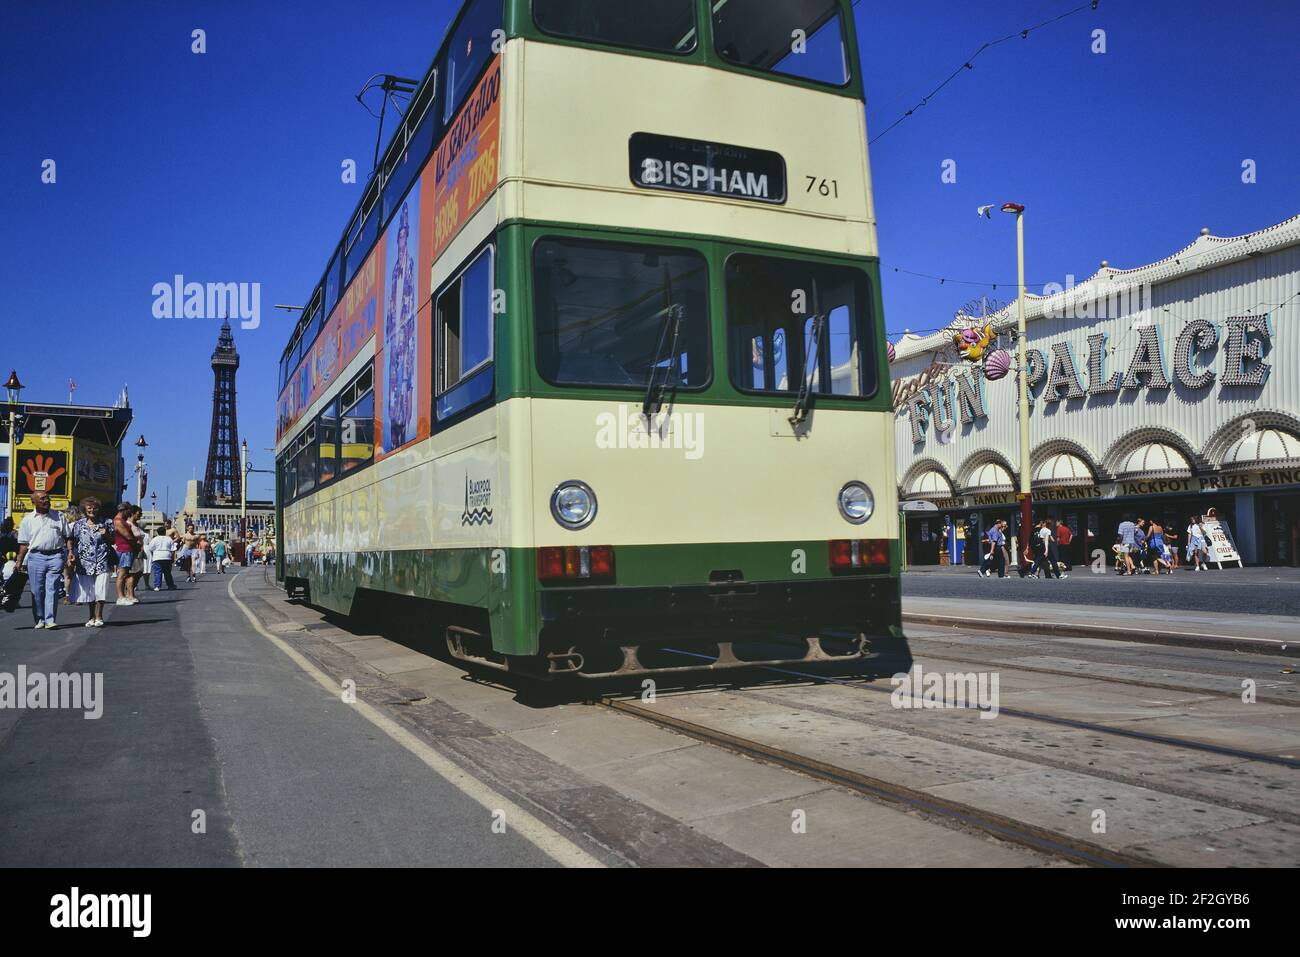 Jubilee car 761 tram, Blackpool, Lancashire, England, UK Stock Photo